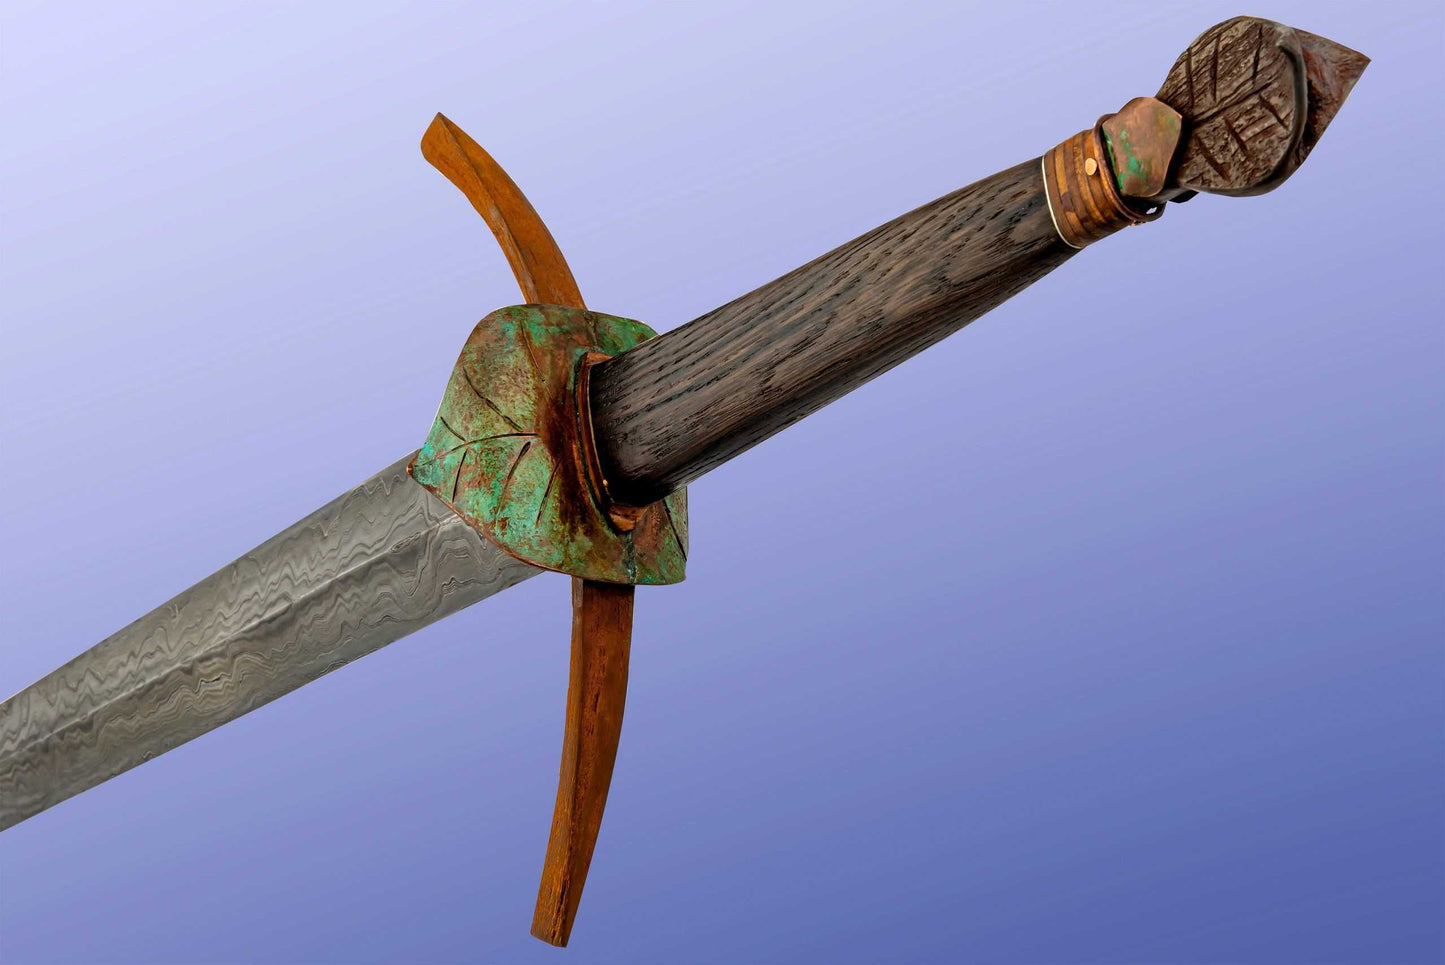 Scott Roush "The Gift Of The Ghillie Dhu" Damascus Sword, Wood Scabbard